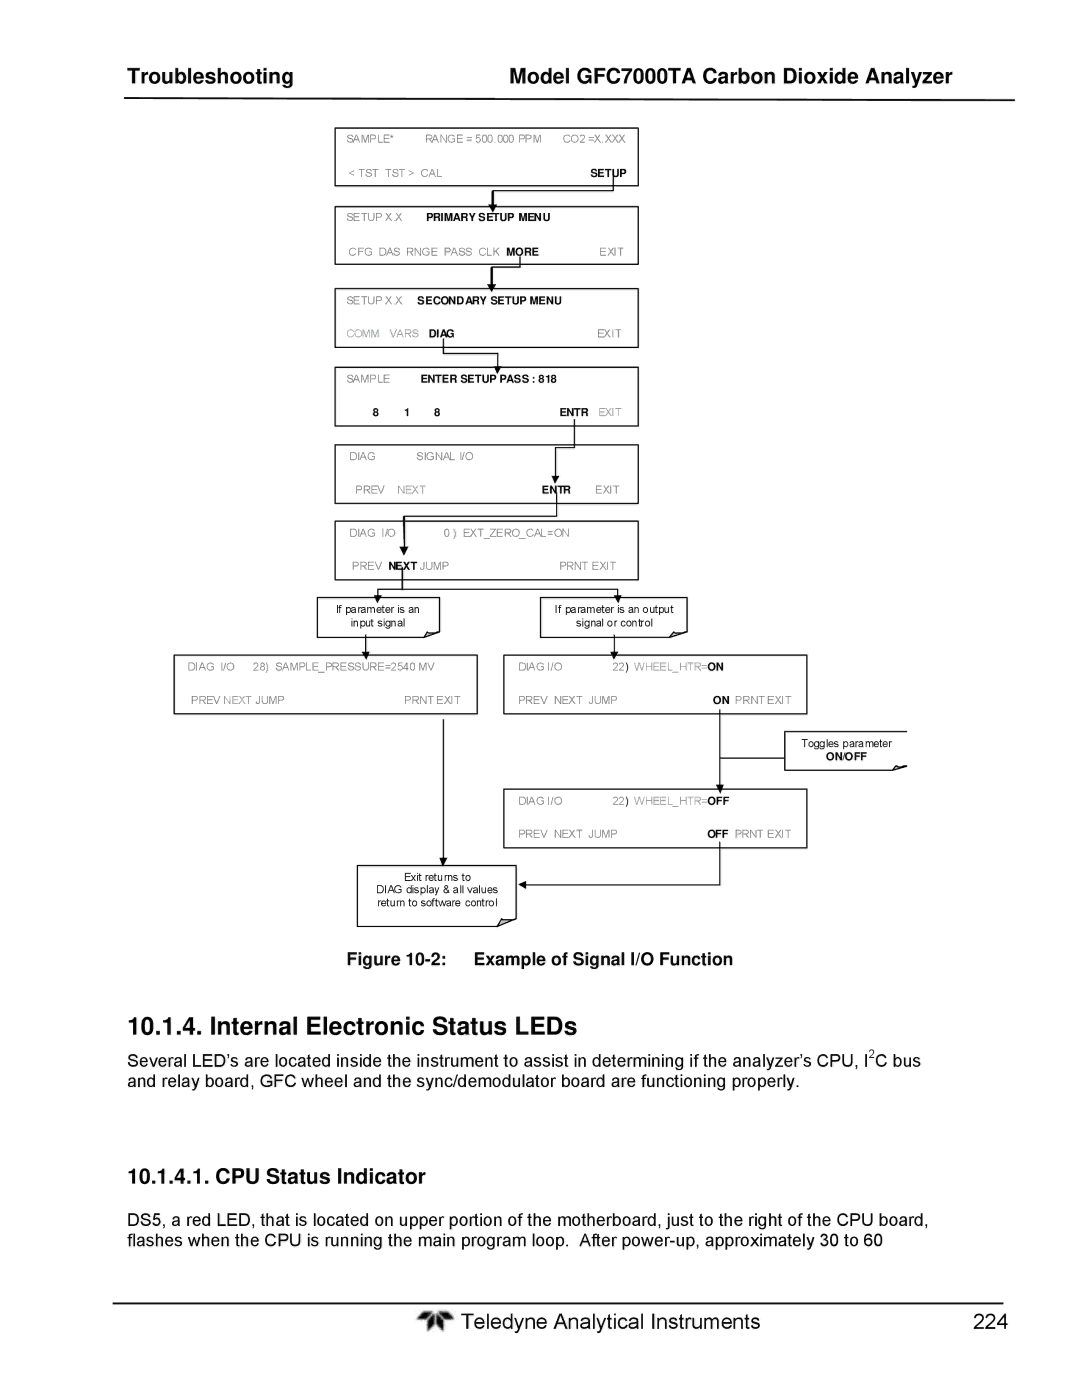 Teledyne gfc 7000ta operation manual Internal Electronic Status LEDs, CPU Status Indicator 